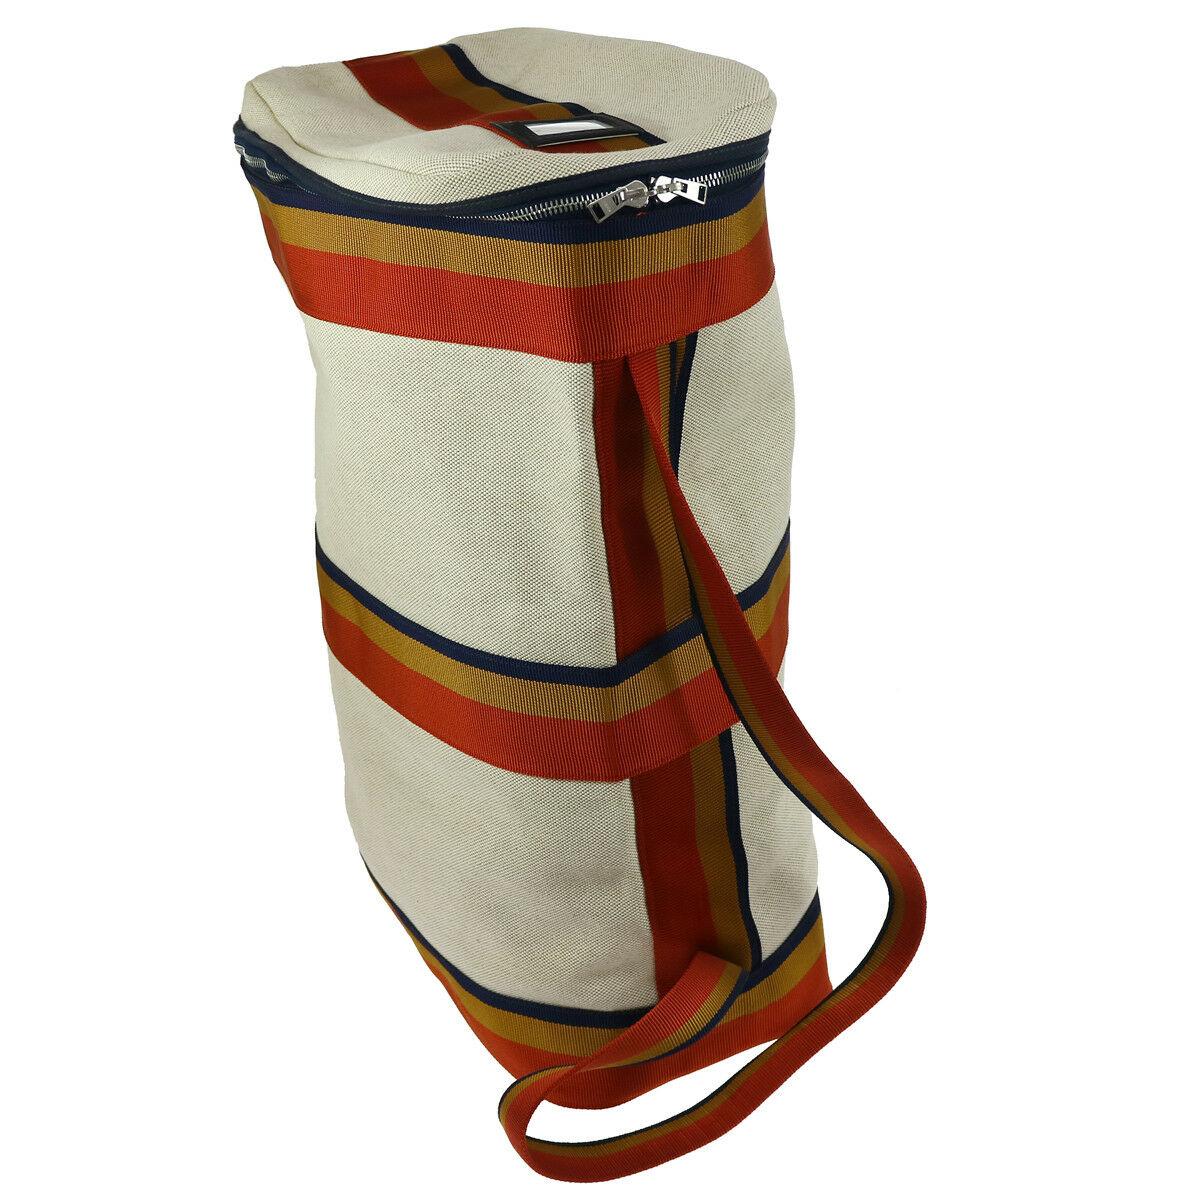 Hermes Canvas Tan Red Blue Orange Stripe Men's Knapsack Shoulder Travel Bag

Canvas
Fabric
Woven lining
Zipper closure
Shoulder strap drop 15.5